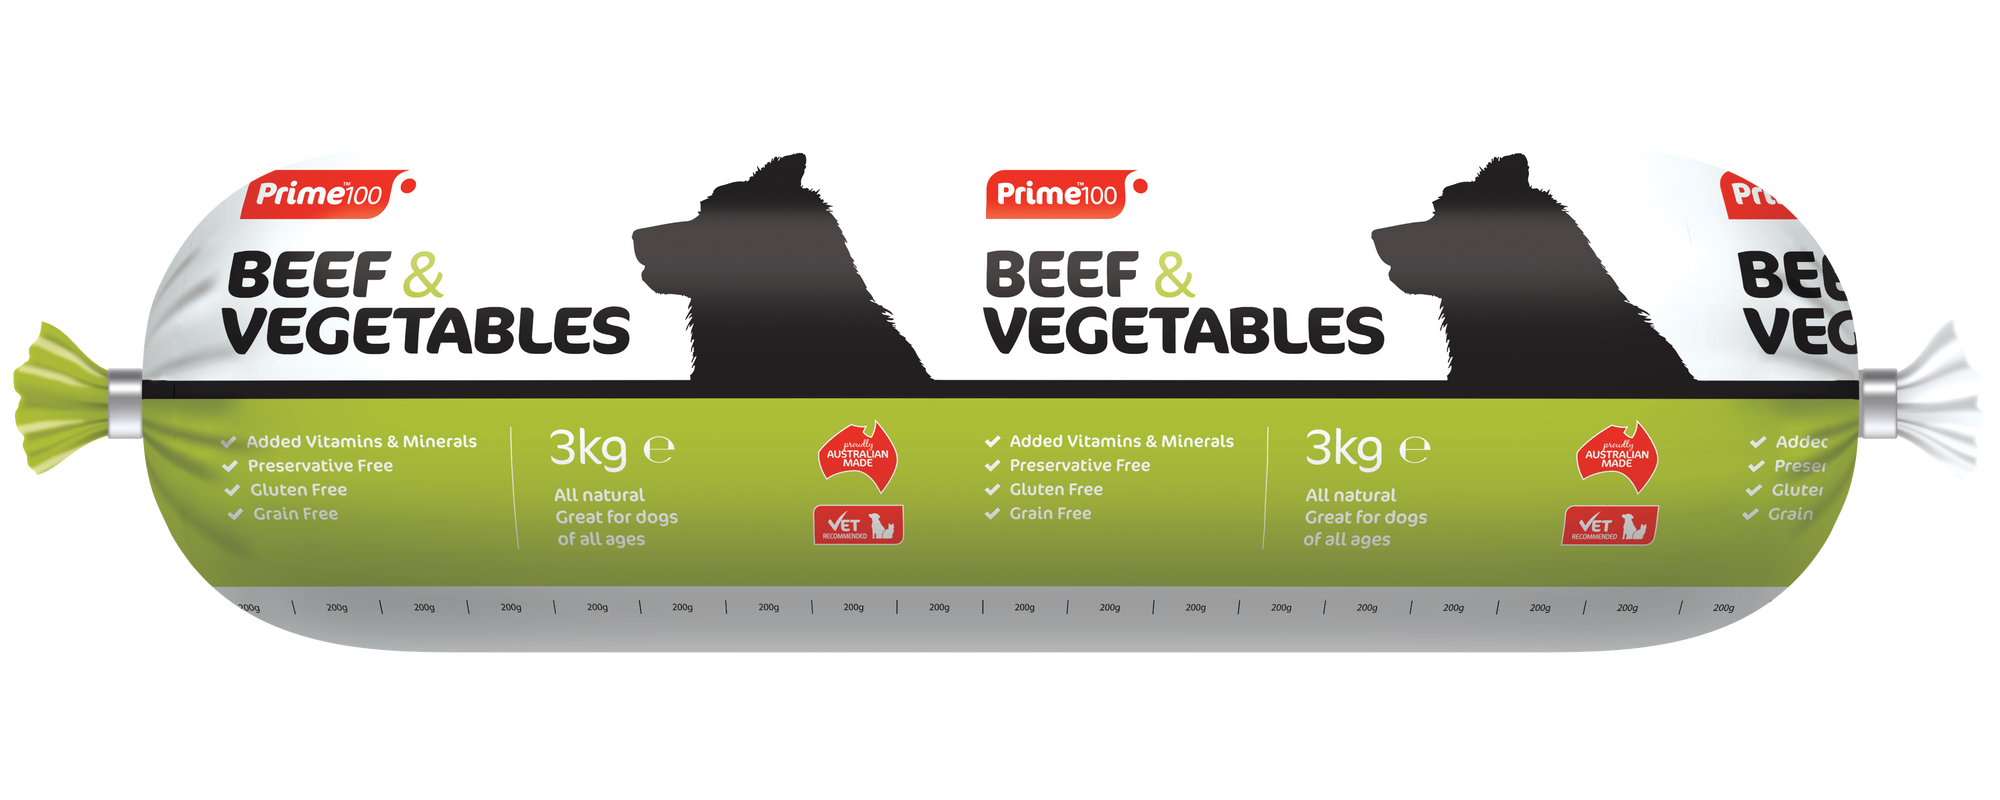 Prime 100 Beef & Vegetable 3Kg Roll - 9340710000053.png